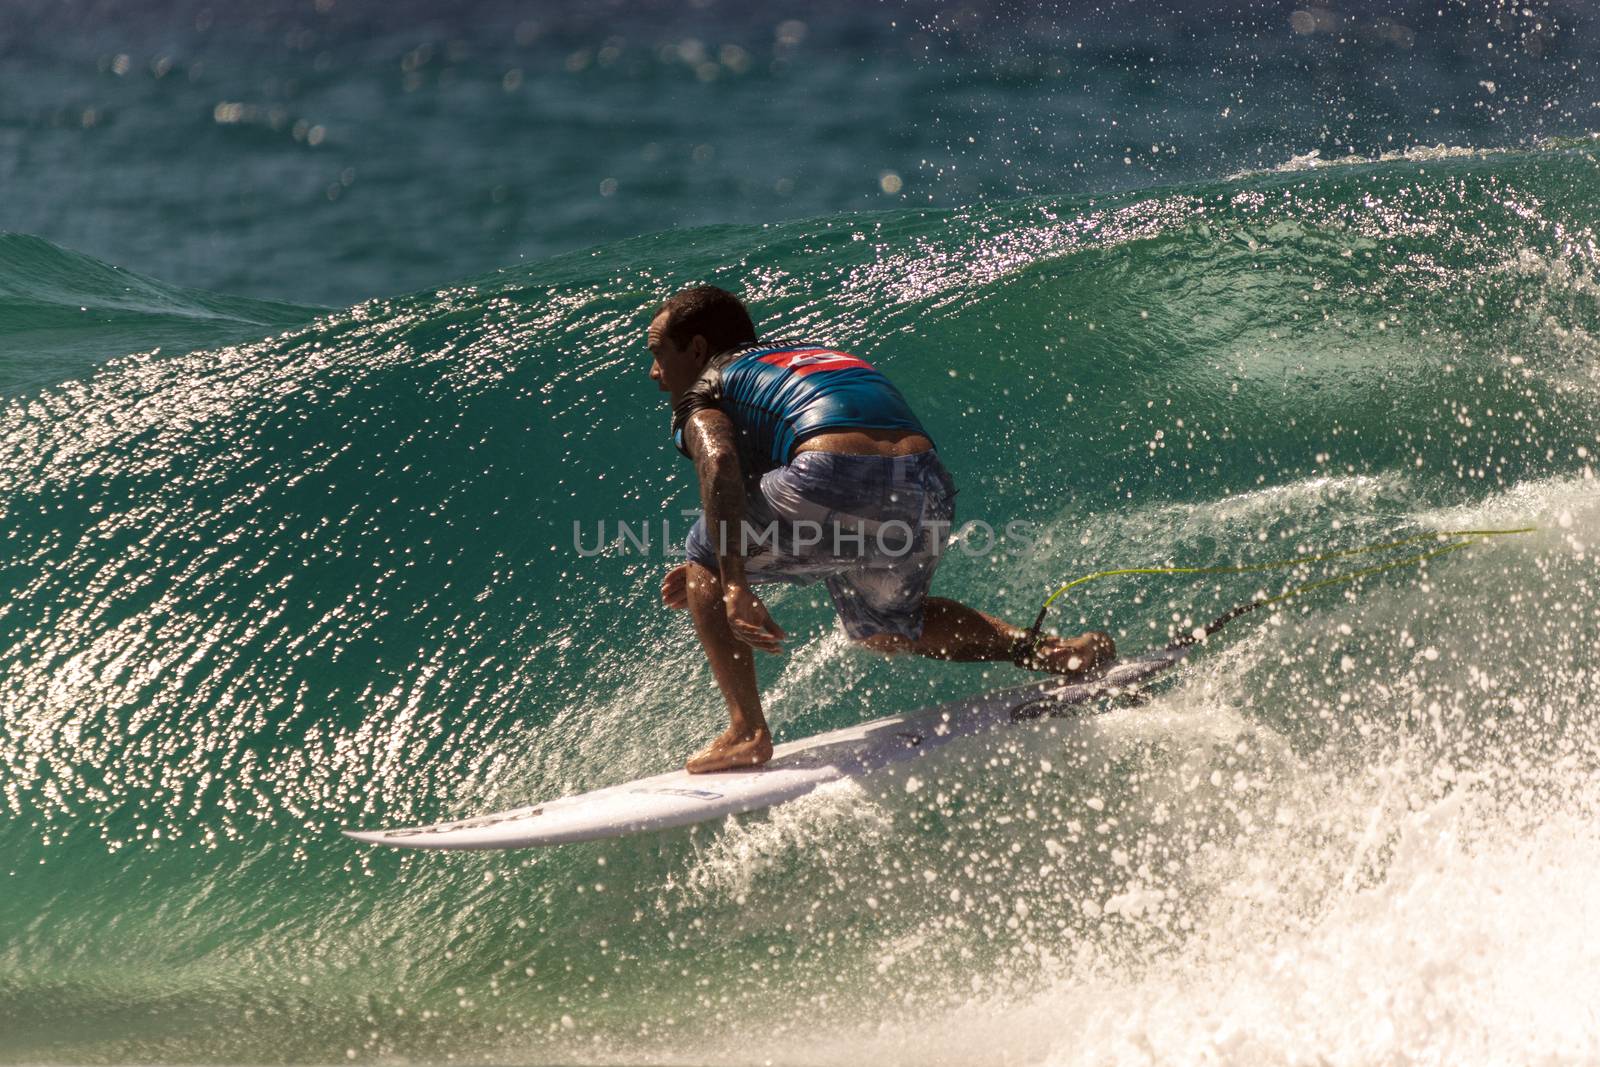 Surfer races the Quiksilver & Roxy Pro World Title Event by Imagecom